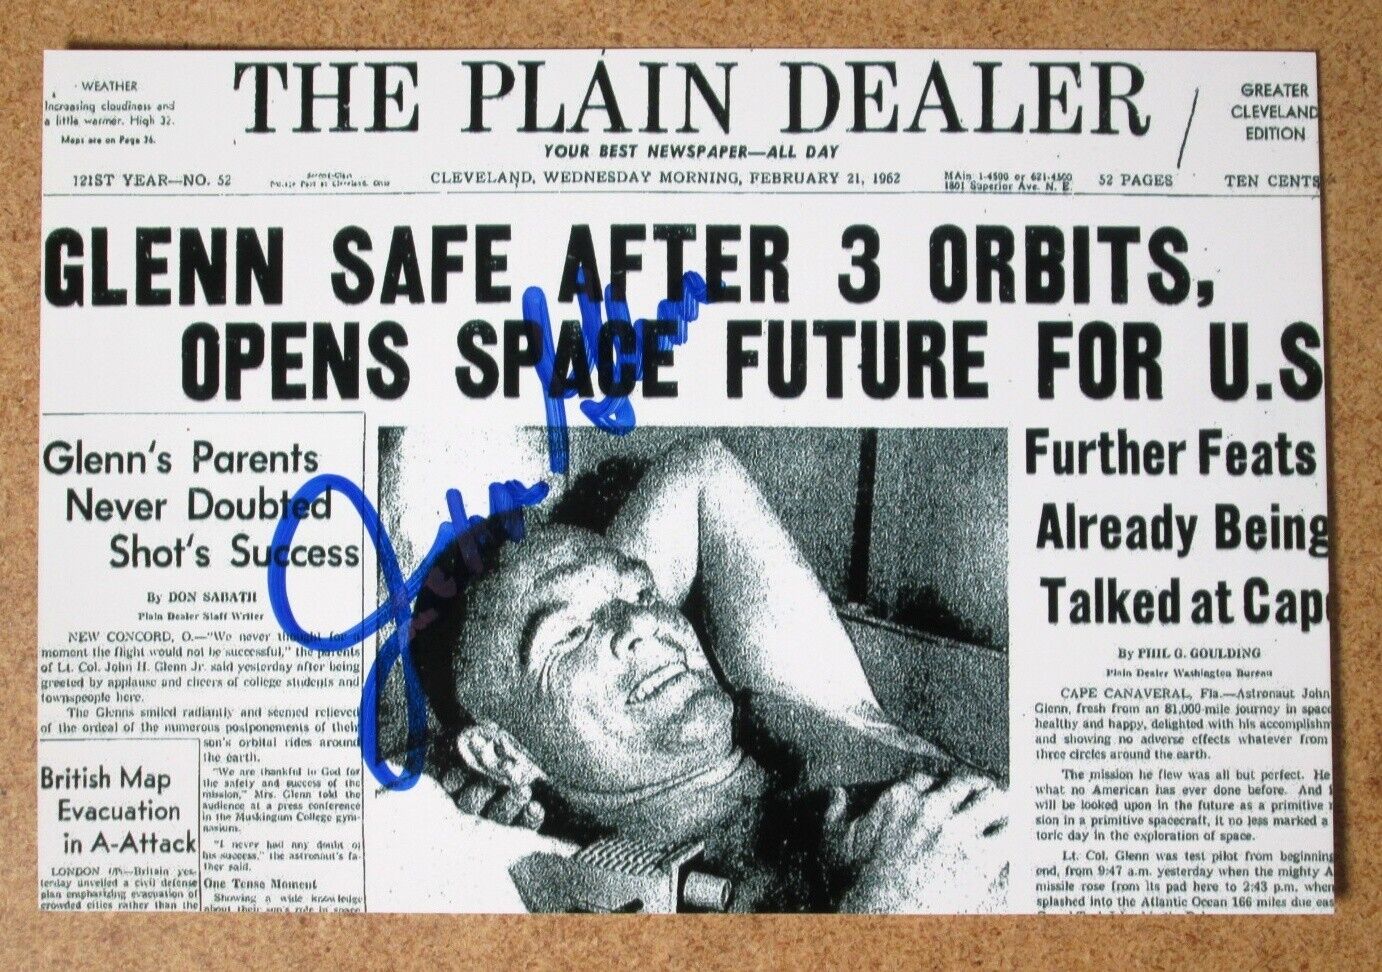 Signed JOHN GLENN 4x6 photo 1962 Cleveland Plain Dealer NASA Project Mercury